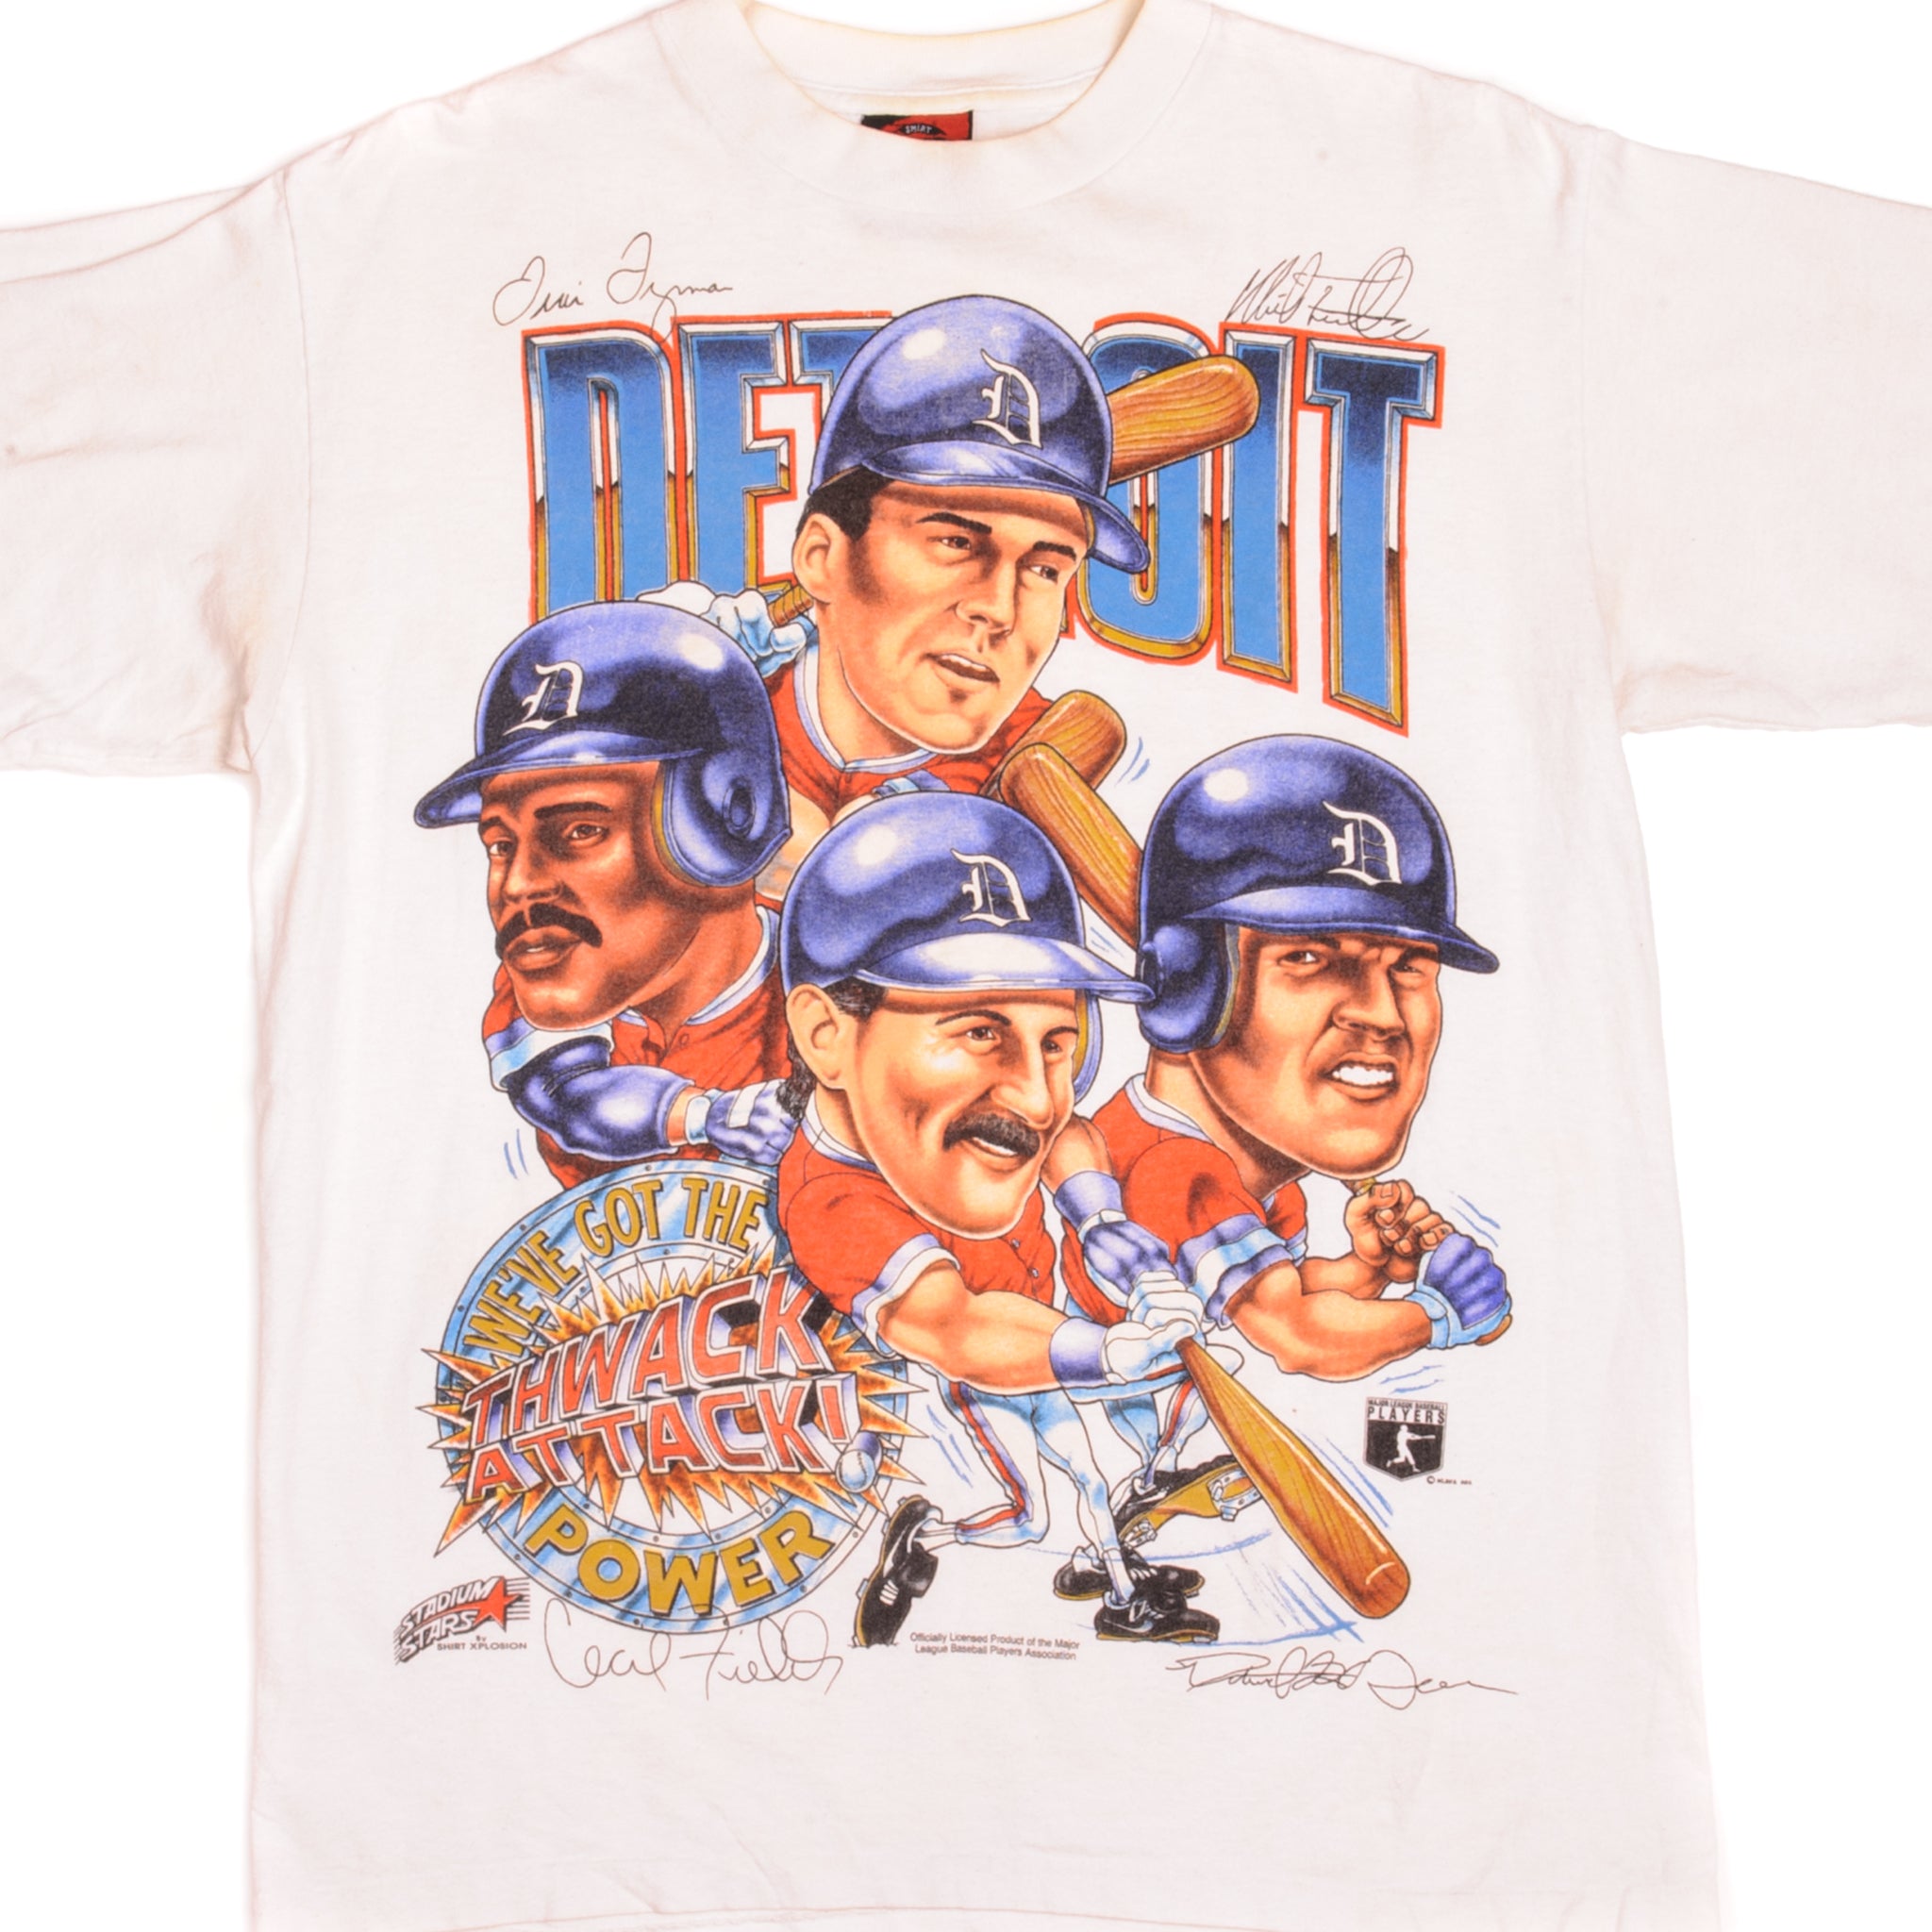 Vintage Detroit Tigers MLB Baseball 1984 BP Jersey T-Shirt Navy Blue Small